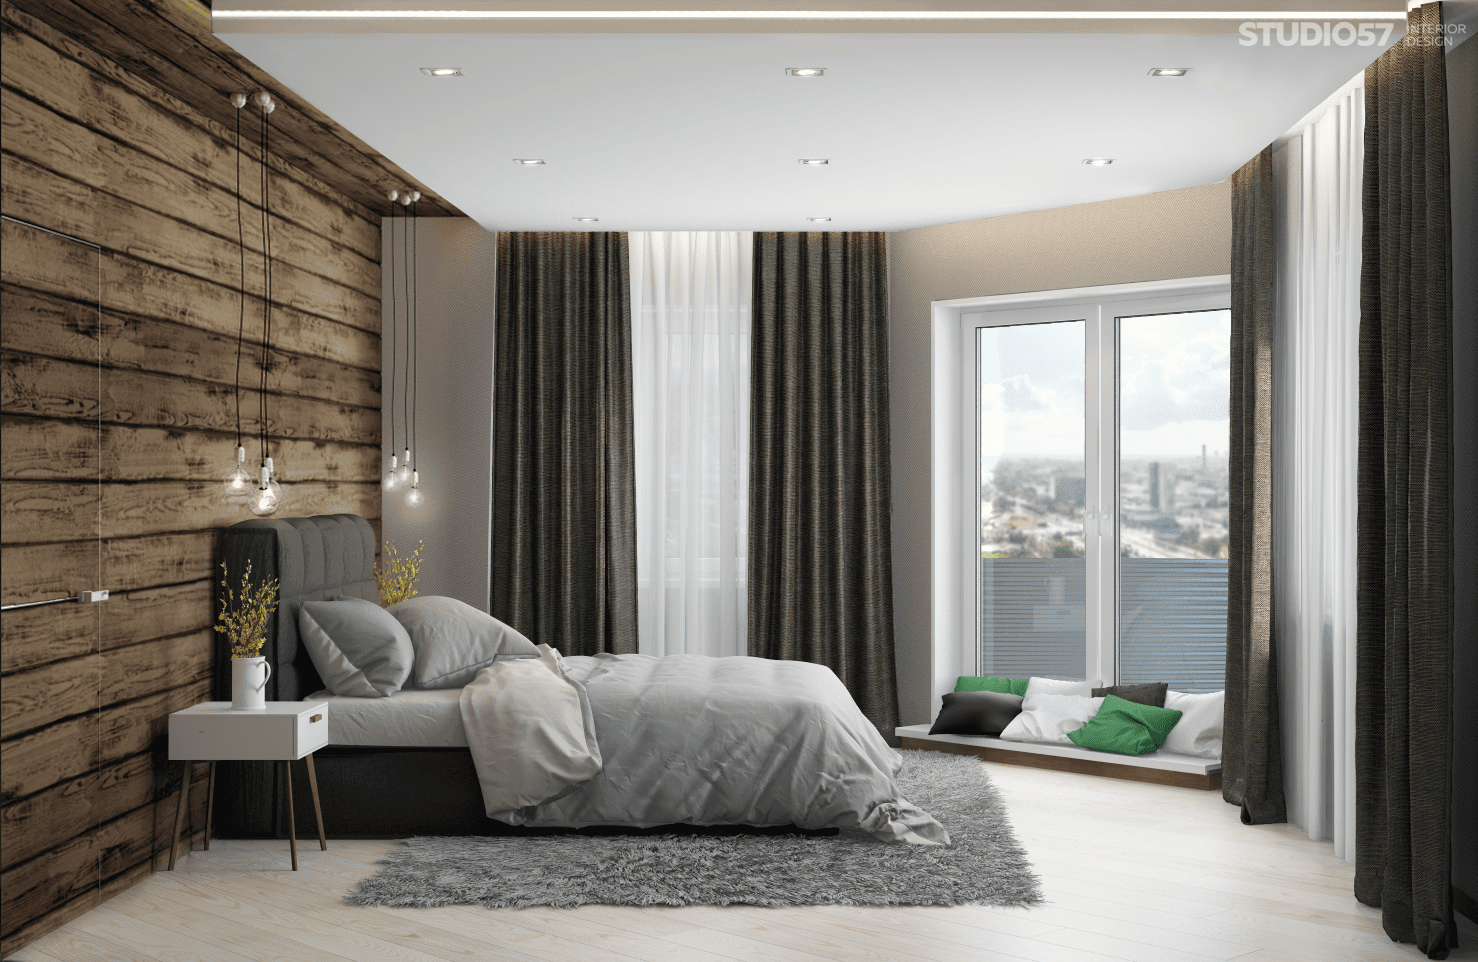 Bedroom interior in eco-style